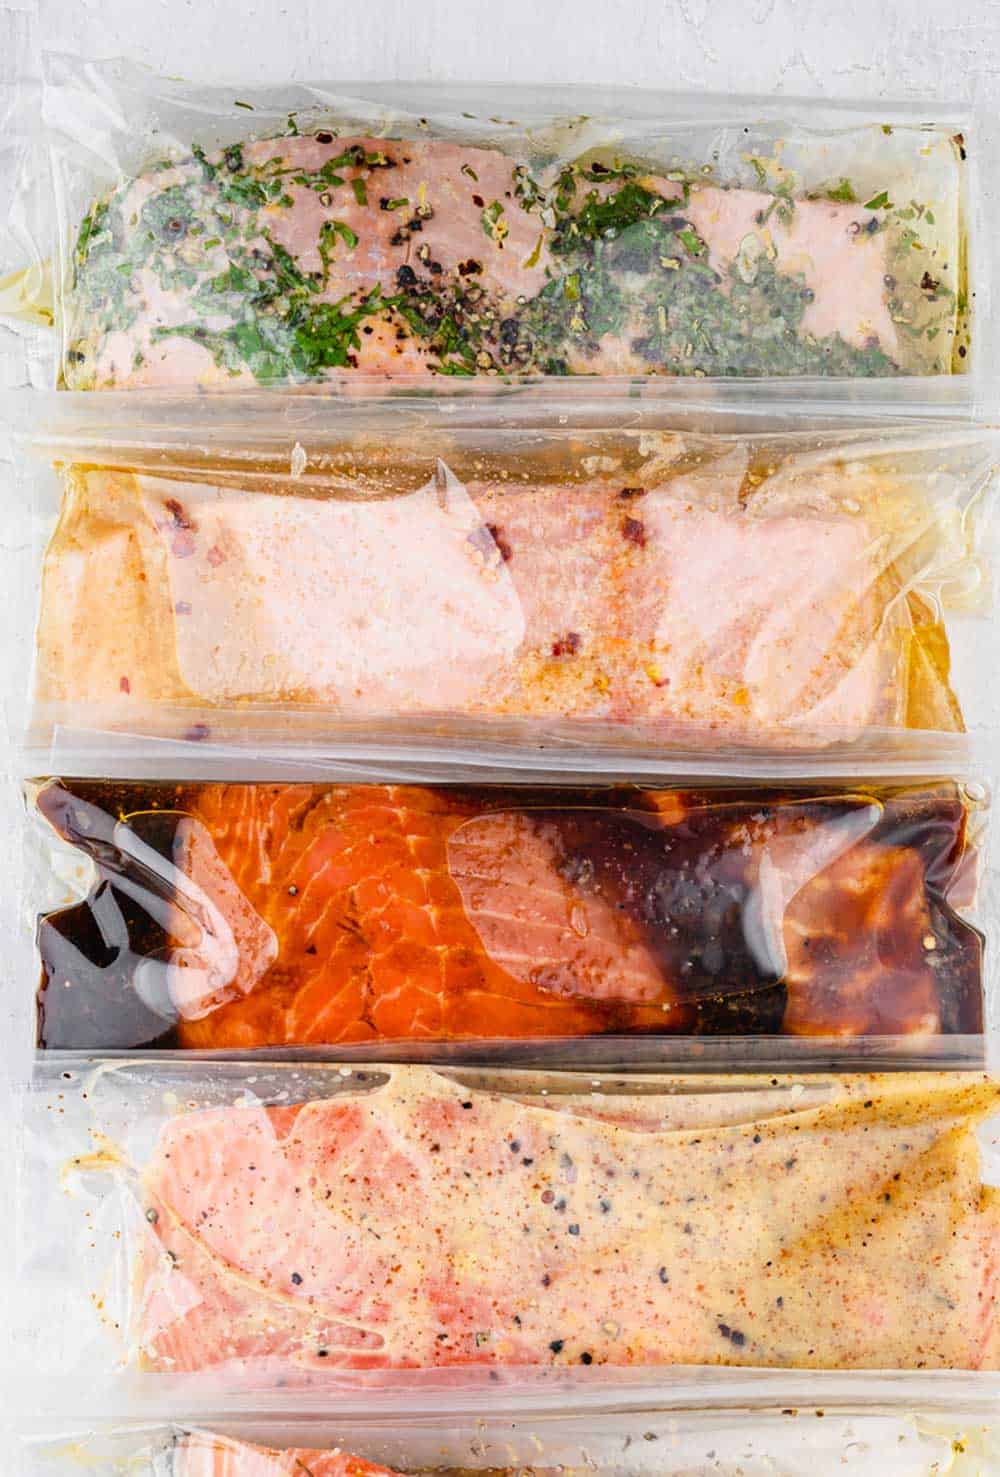 salmon marinades in plastic bags